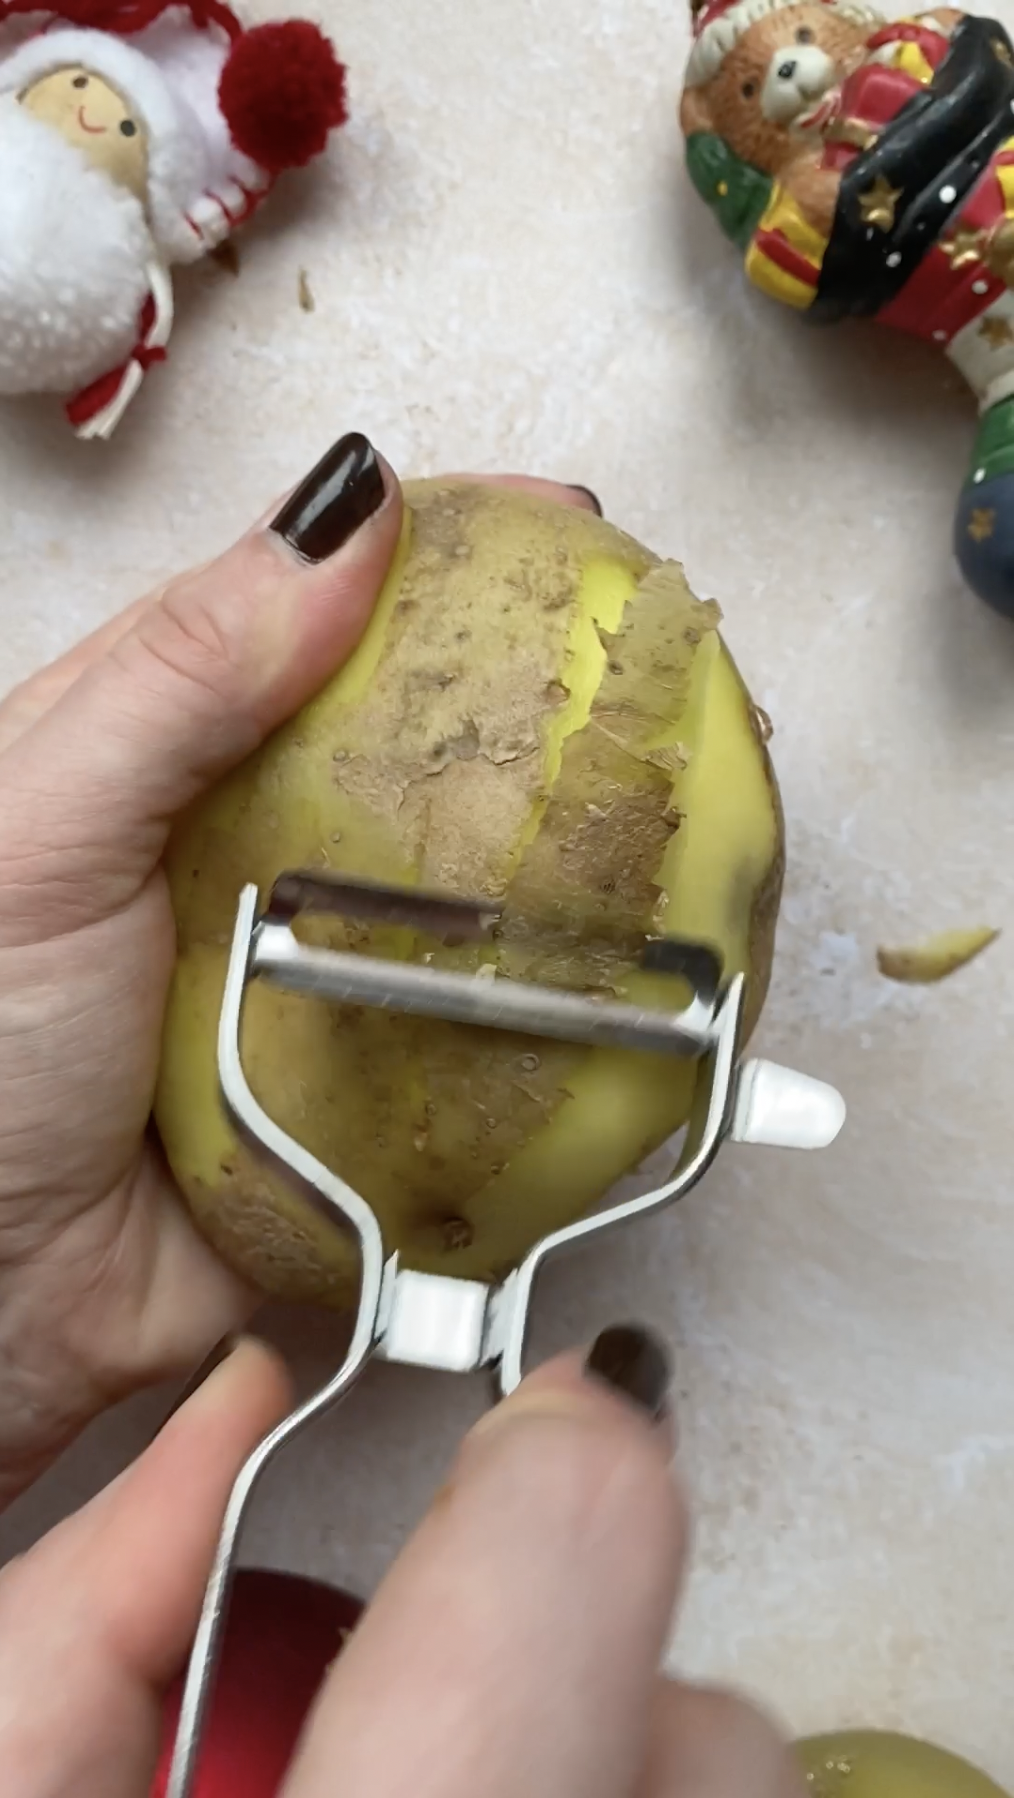 Vegetable peeler hold by a hand, peeling a potato.